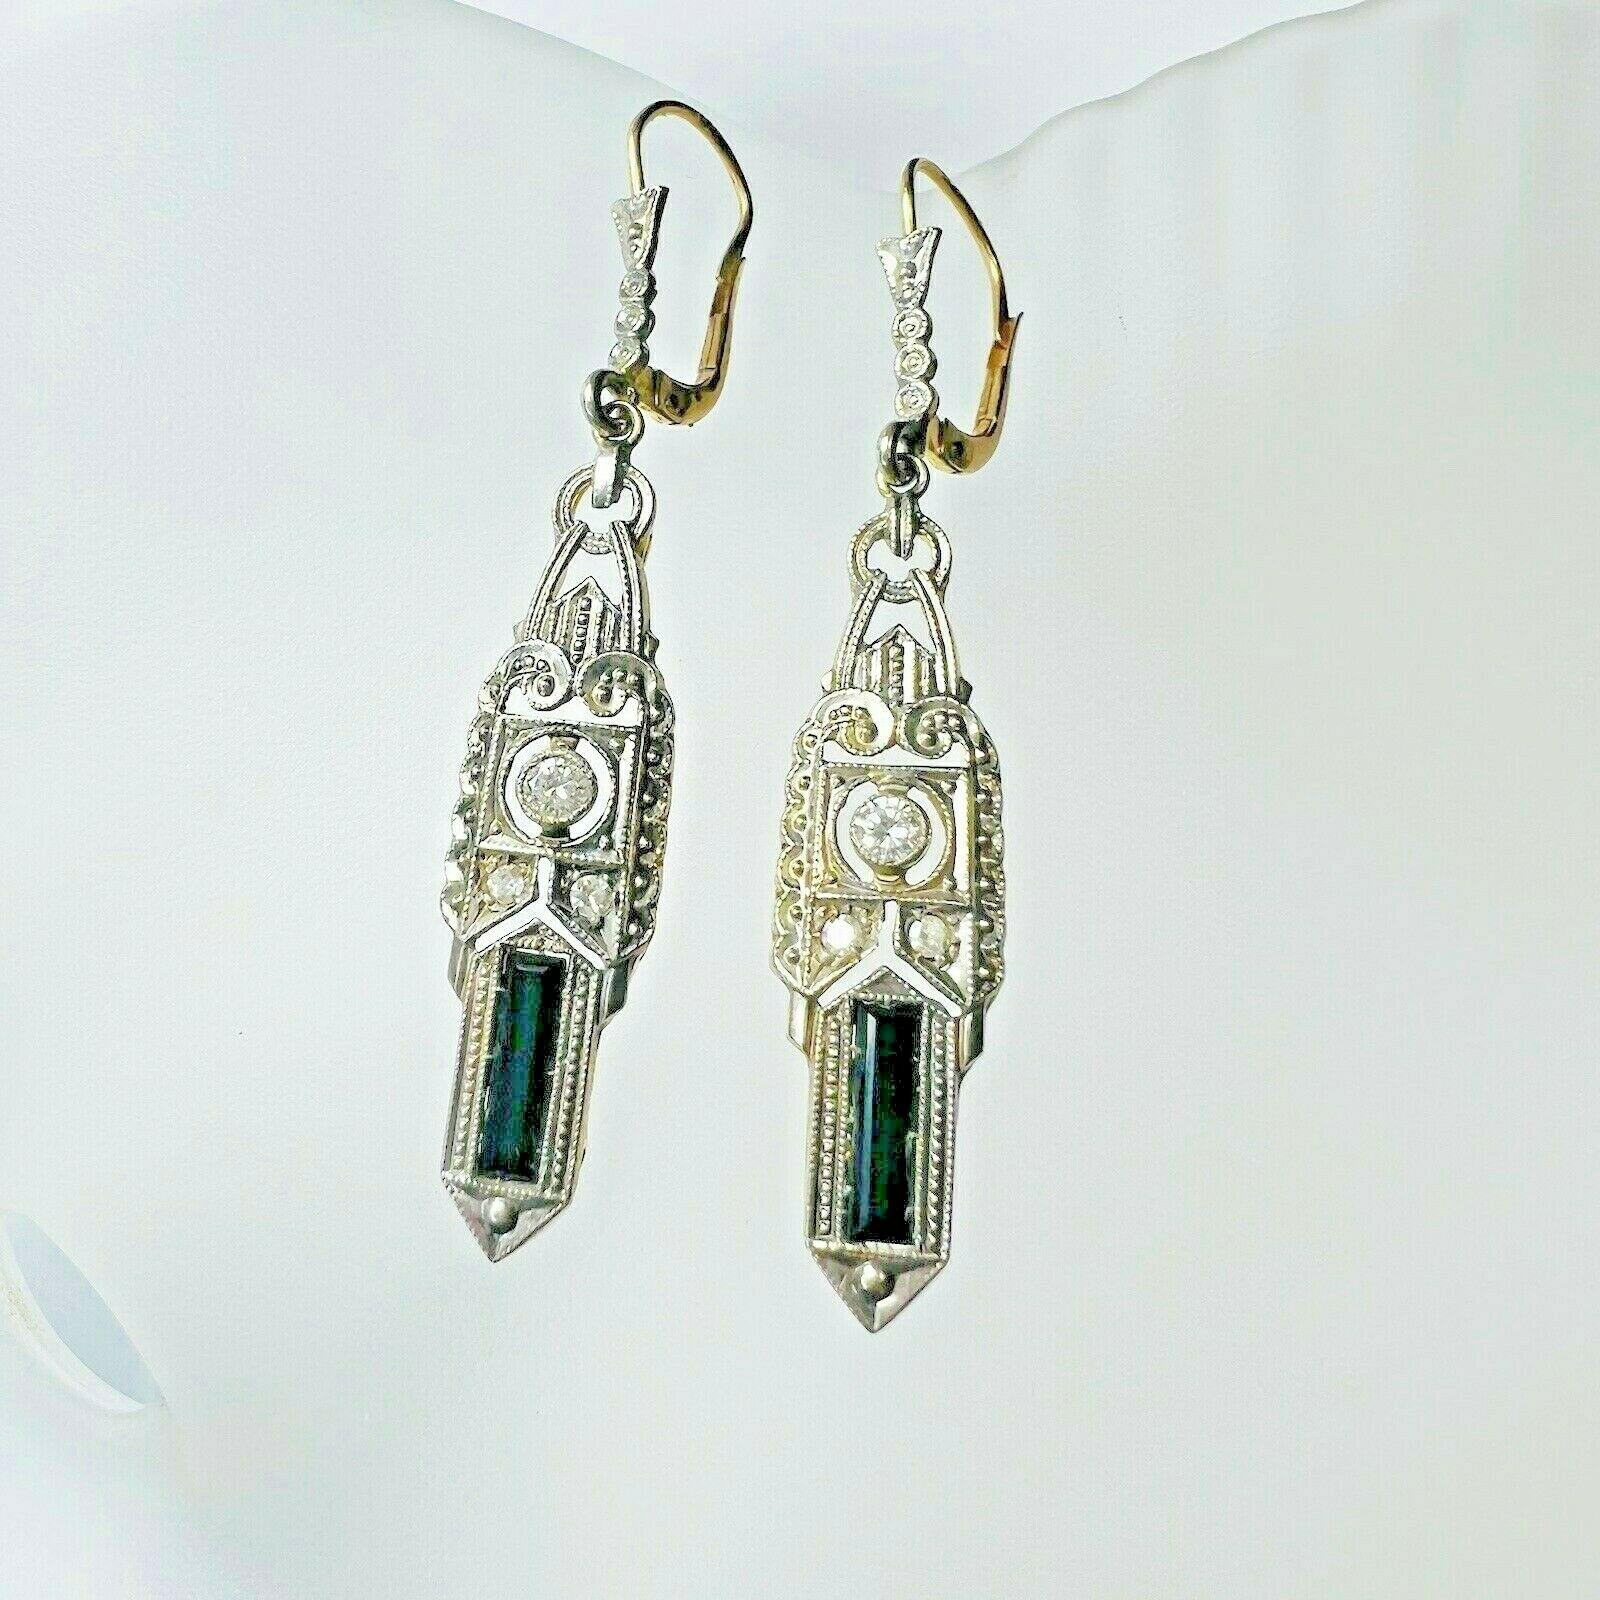 Presenting a:

Art Deco 14K Gold Onyx & Diamond Filigree Dangle Drop Lever Back Earrings 1.75